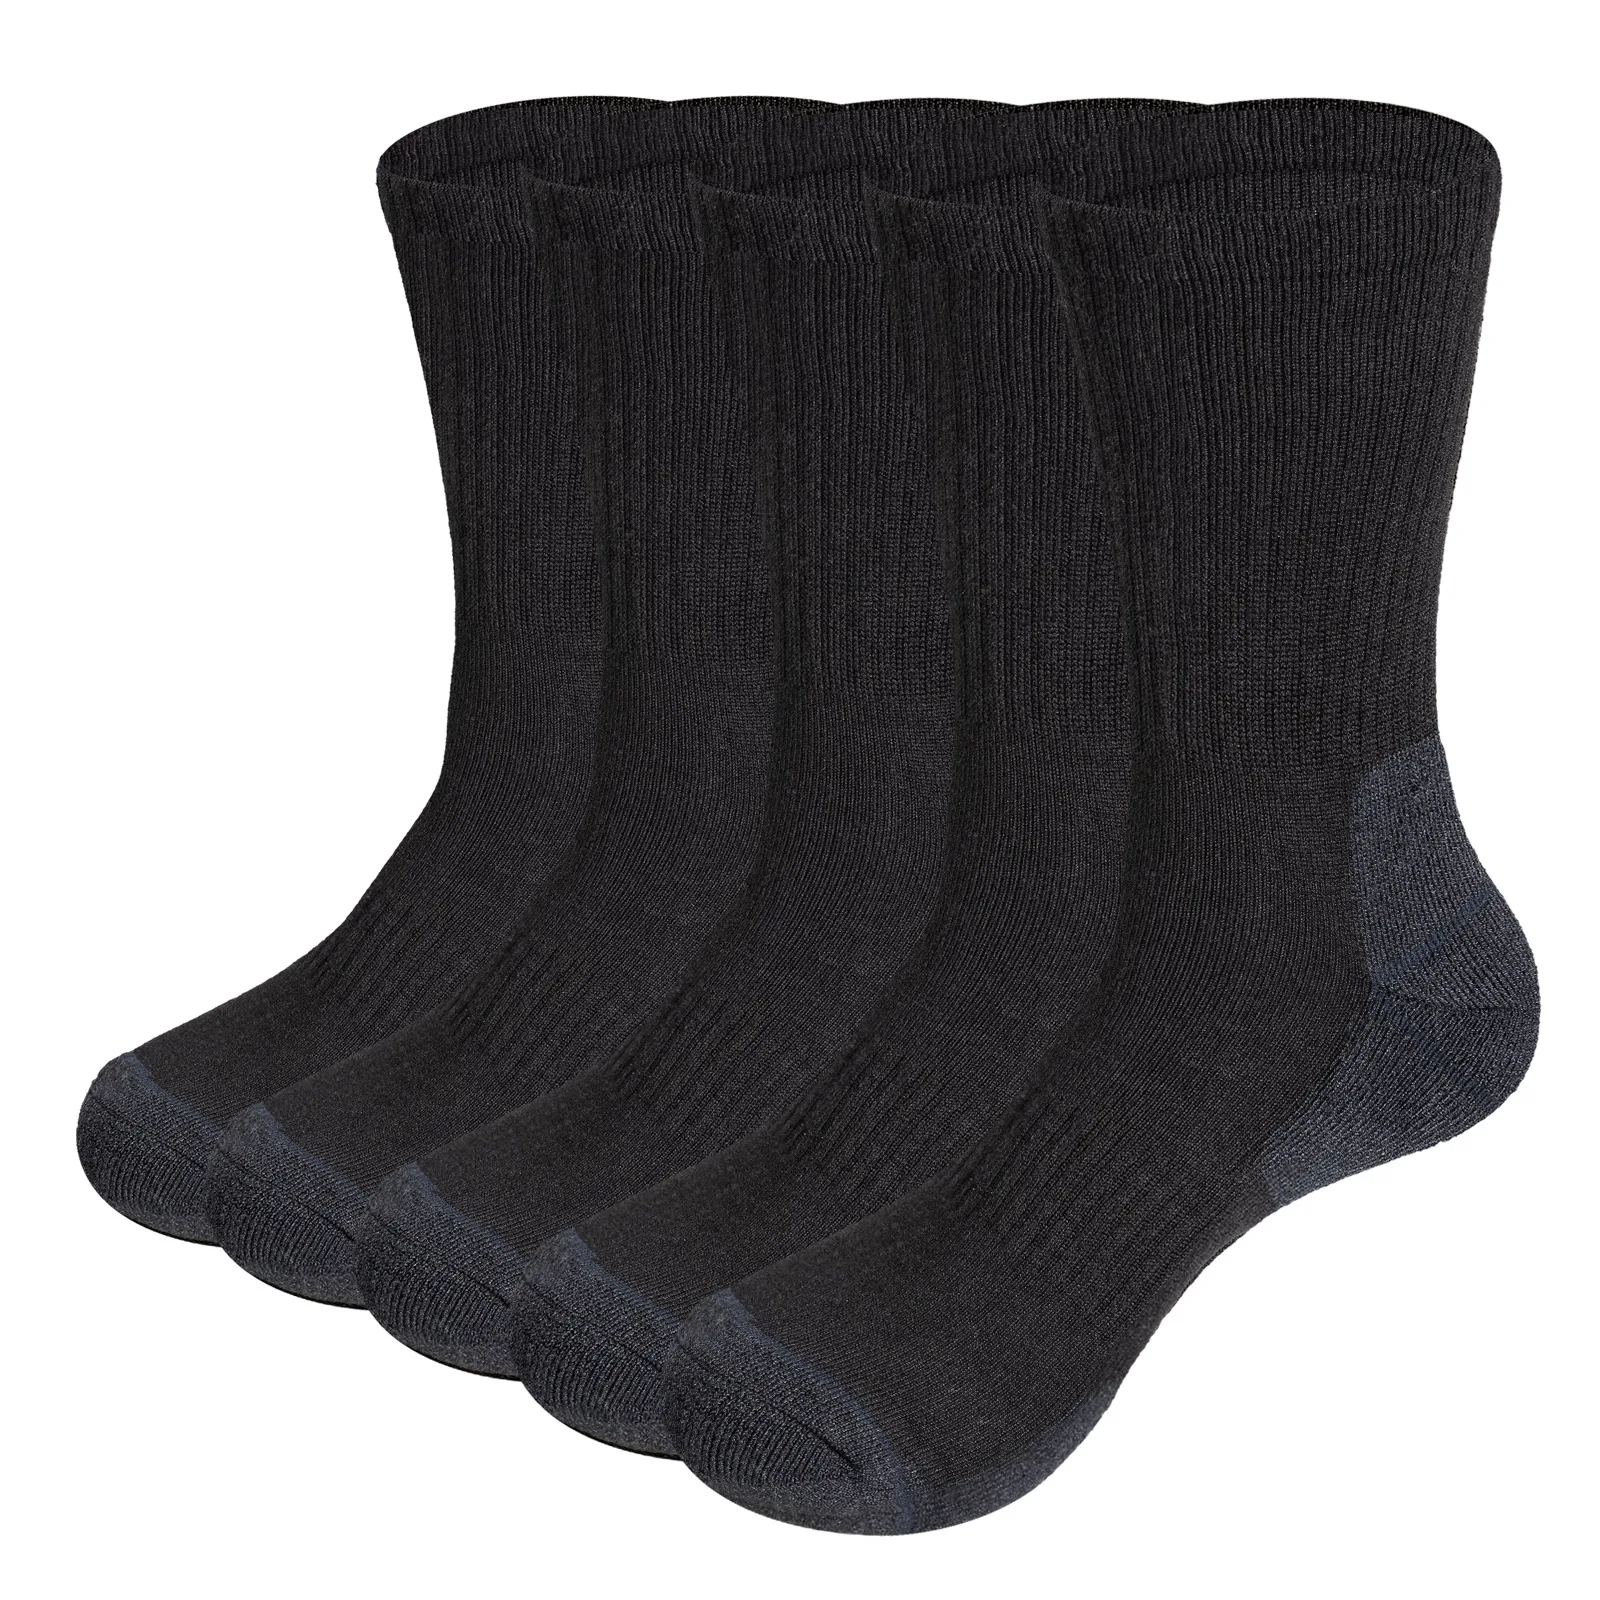 YUEDGE Men Winter Warm Thick Black Breathable Comfortable Cotton Cushion Crew Casual Socks 5 Pairs 37-46 EU